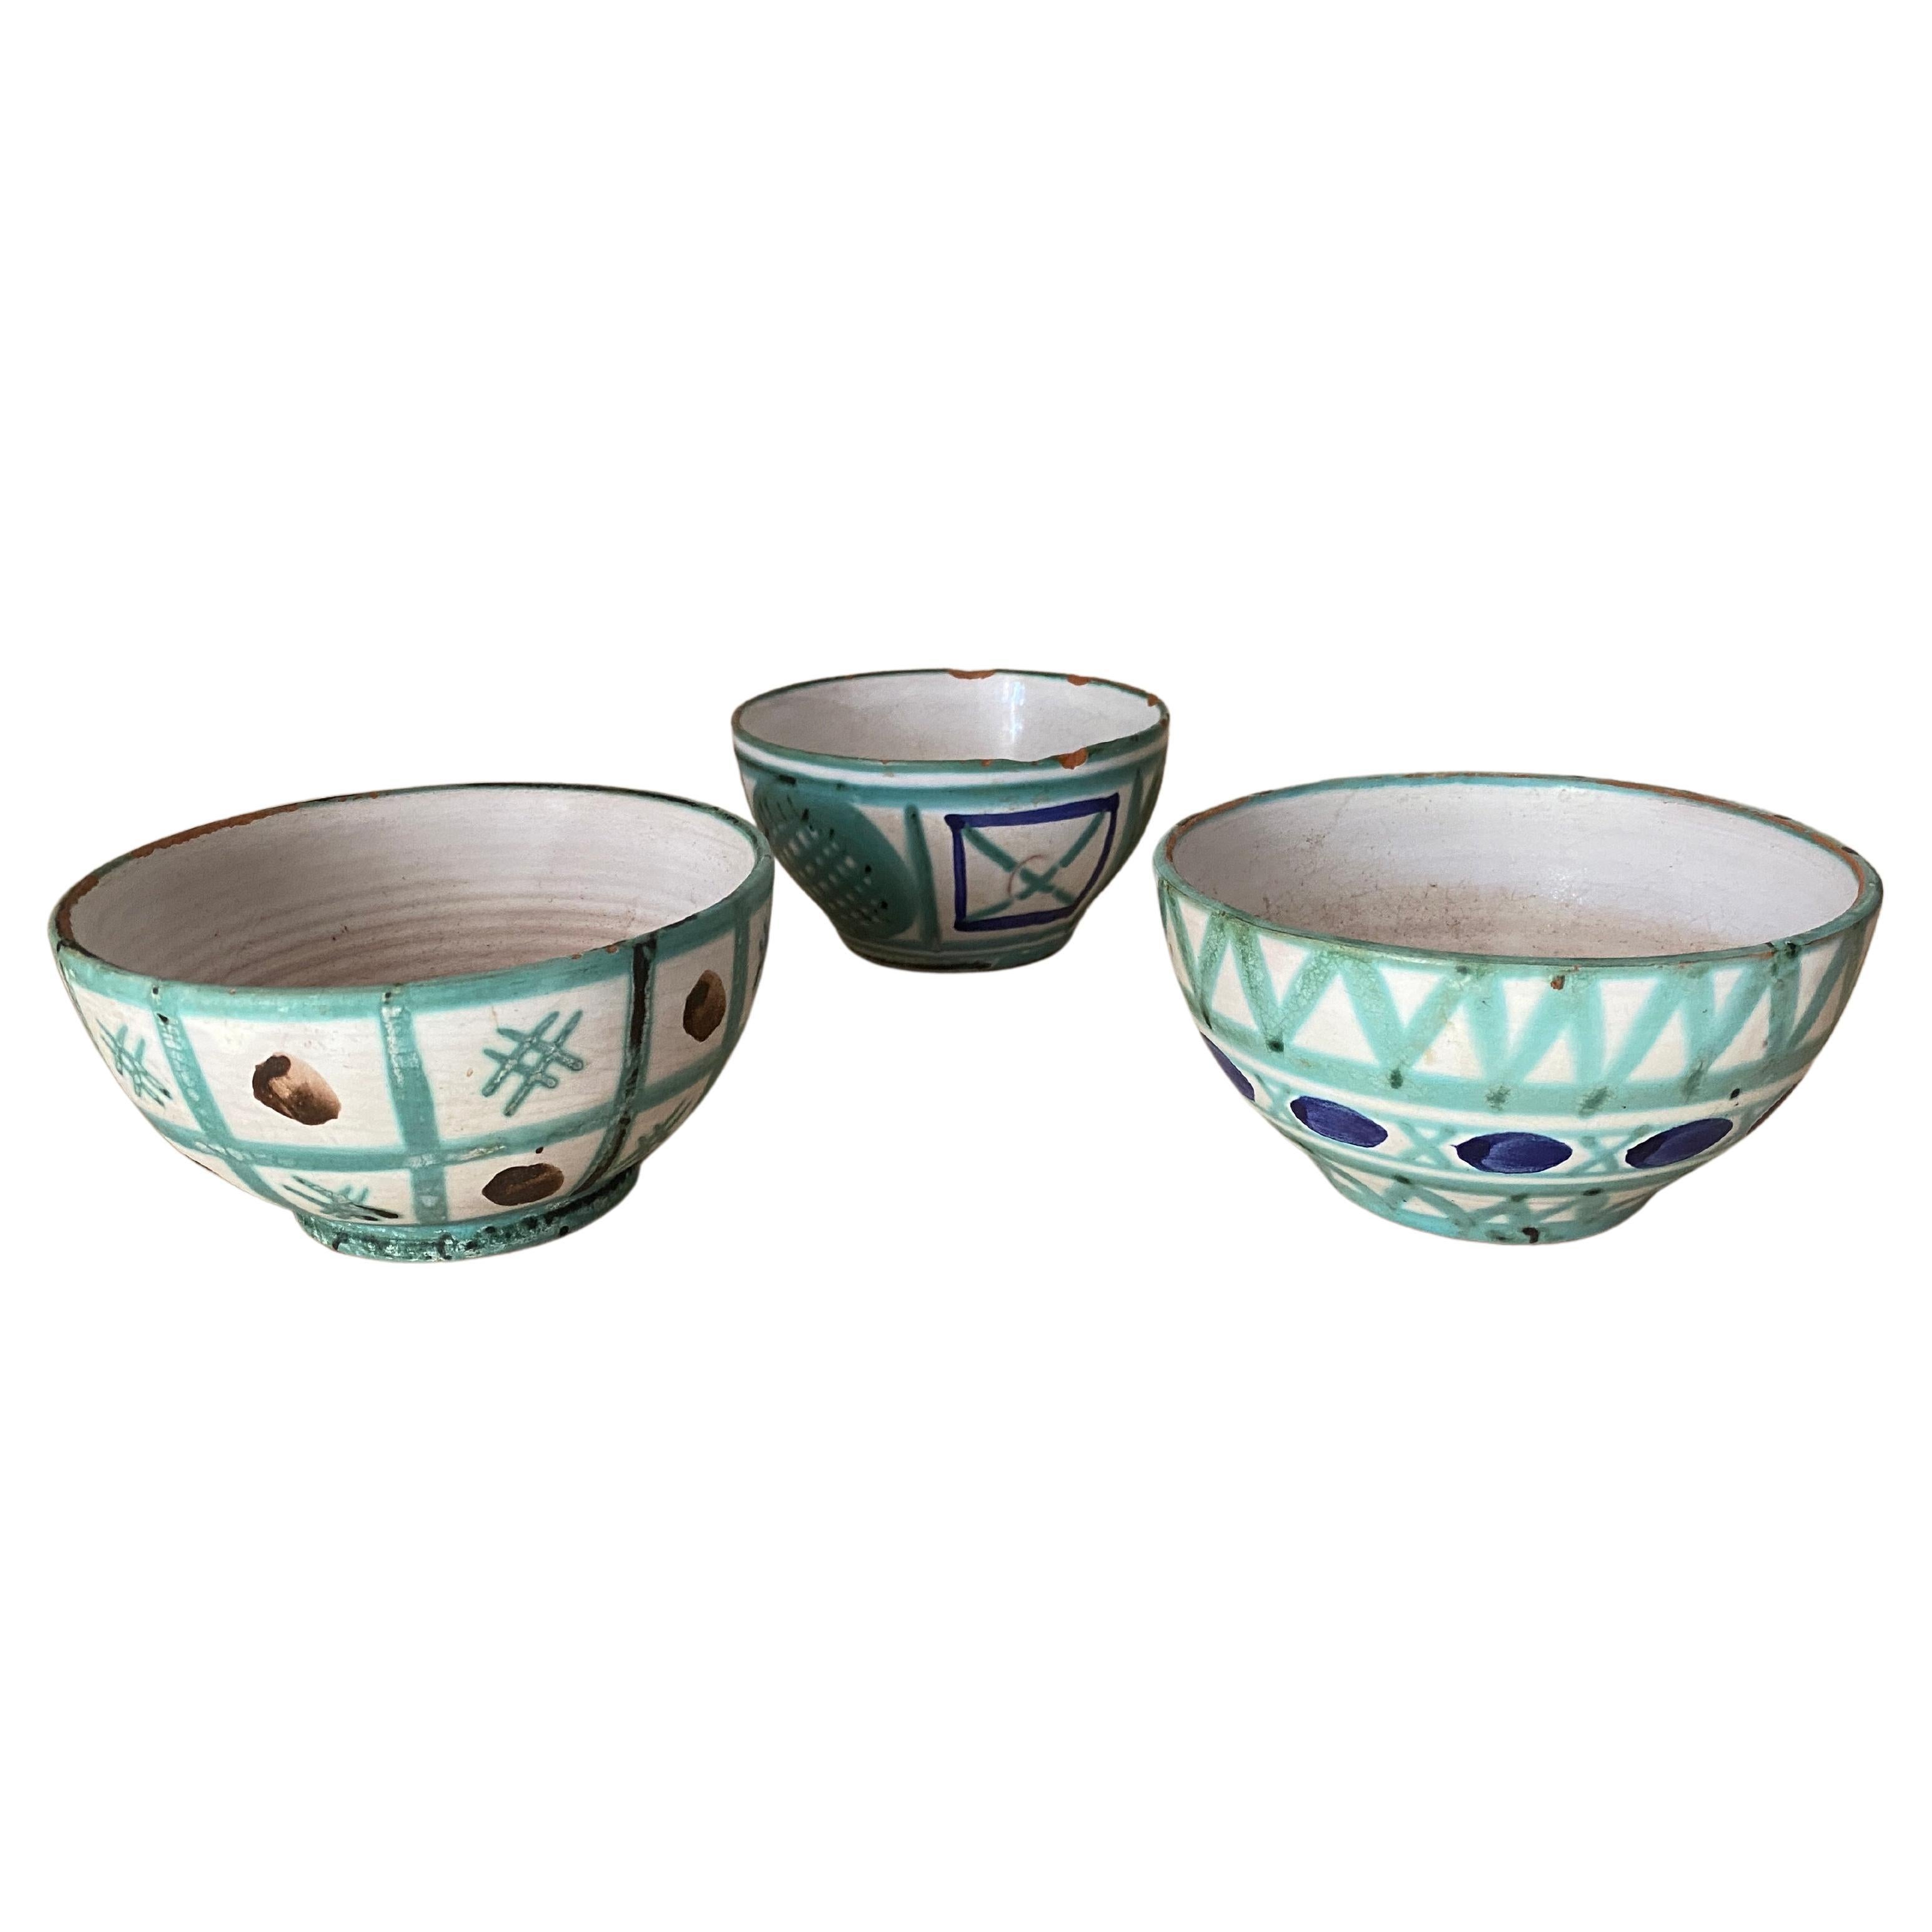 Robert Picault Ceramic bowls Green Blue and Brown Color France 1950 Set of 3 For Sale